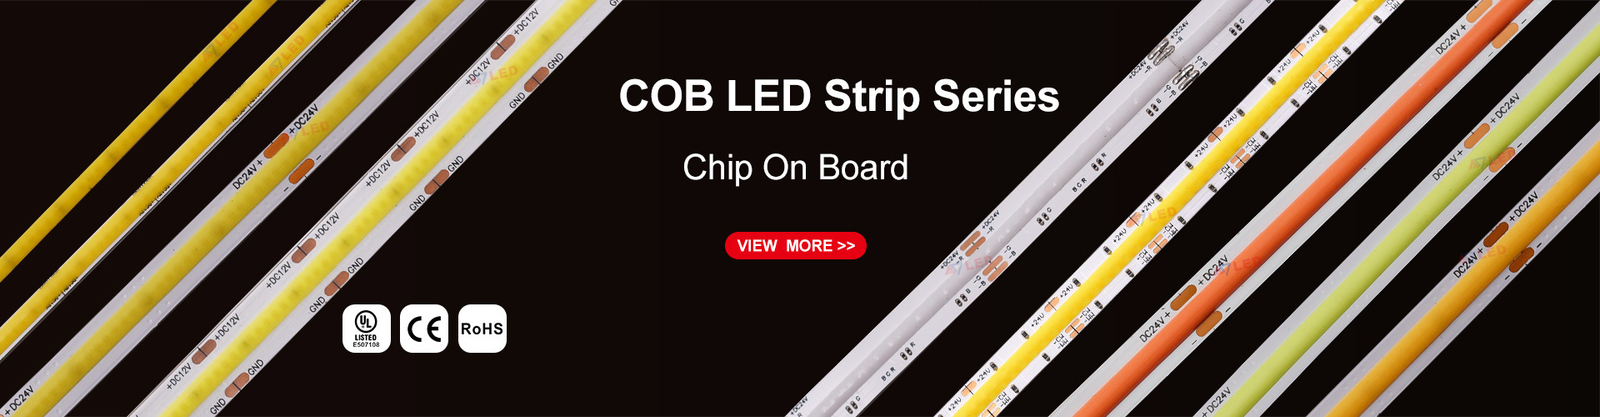 COB LED Strip